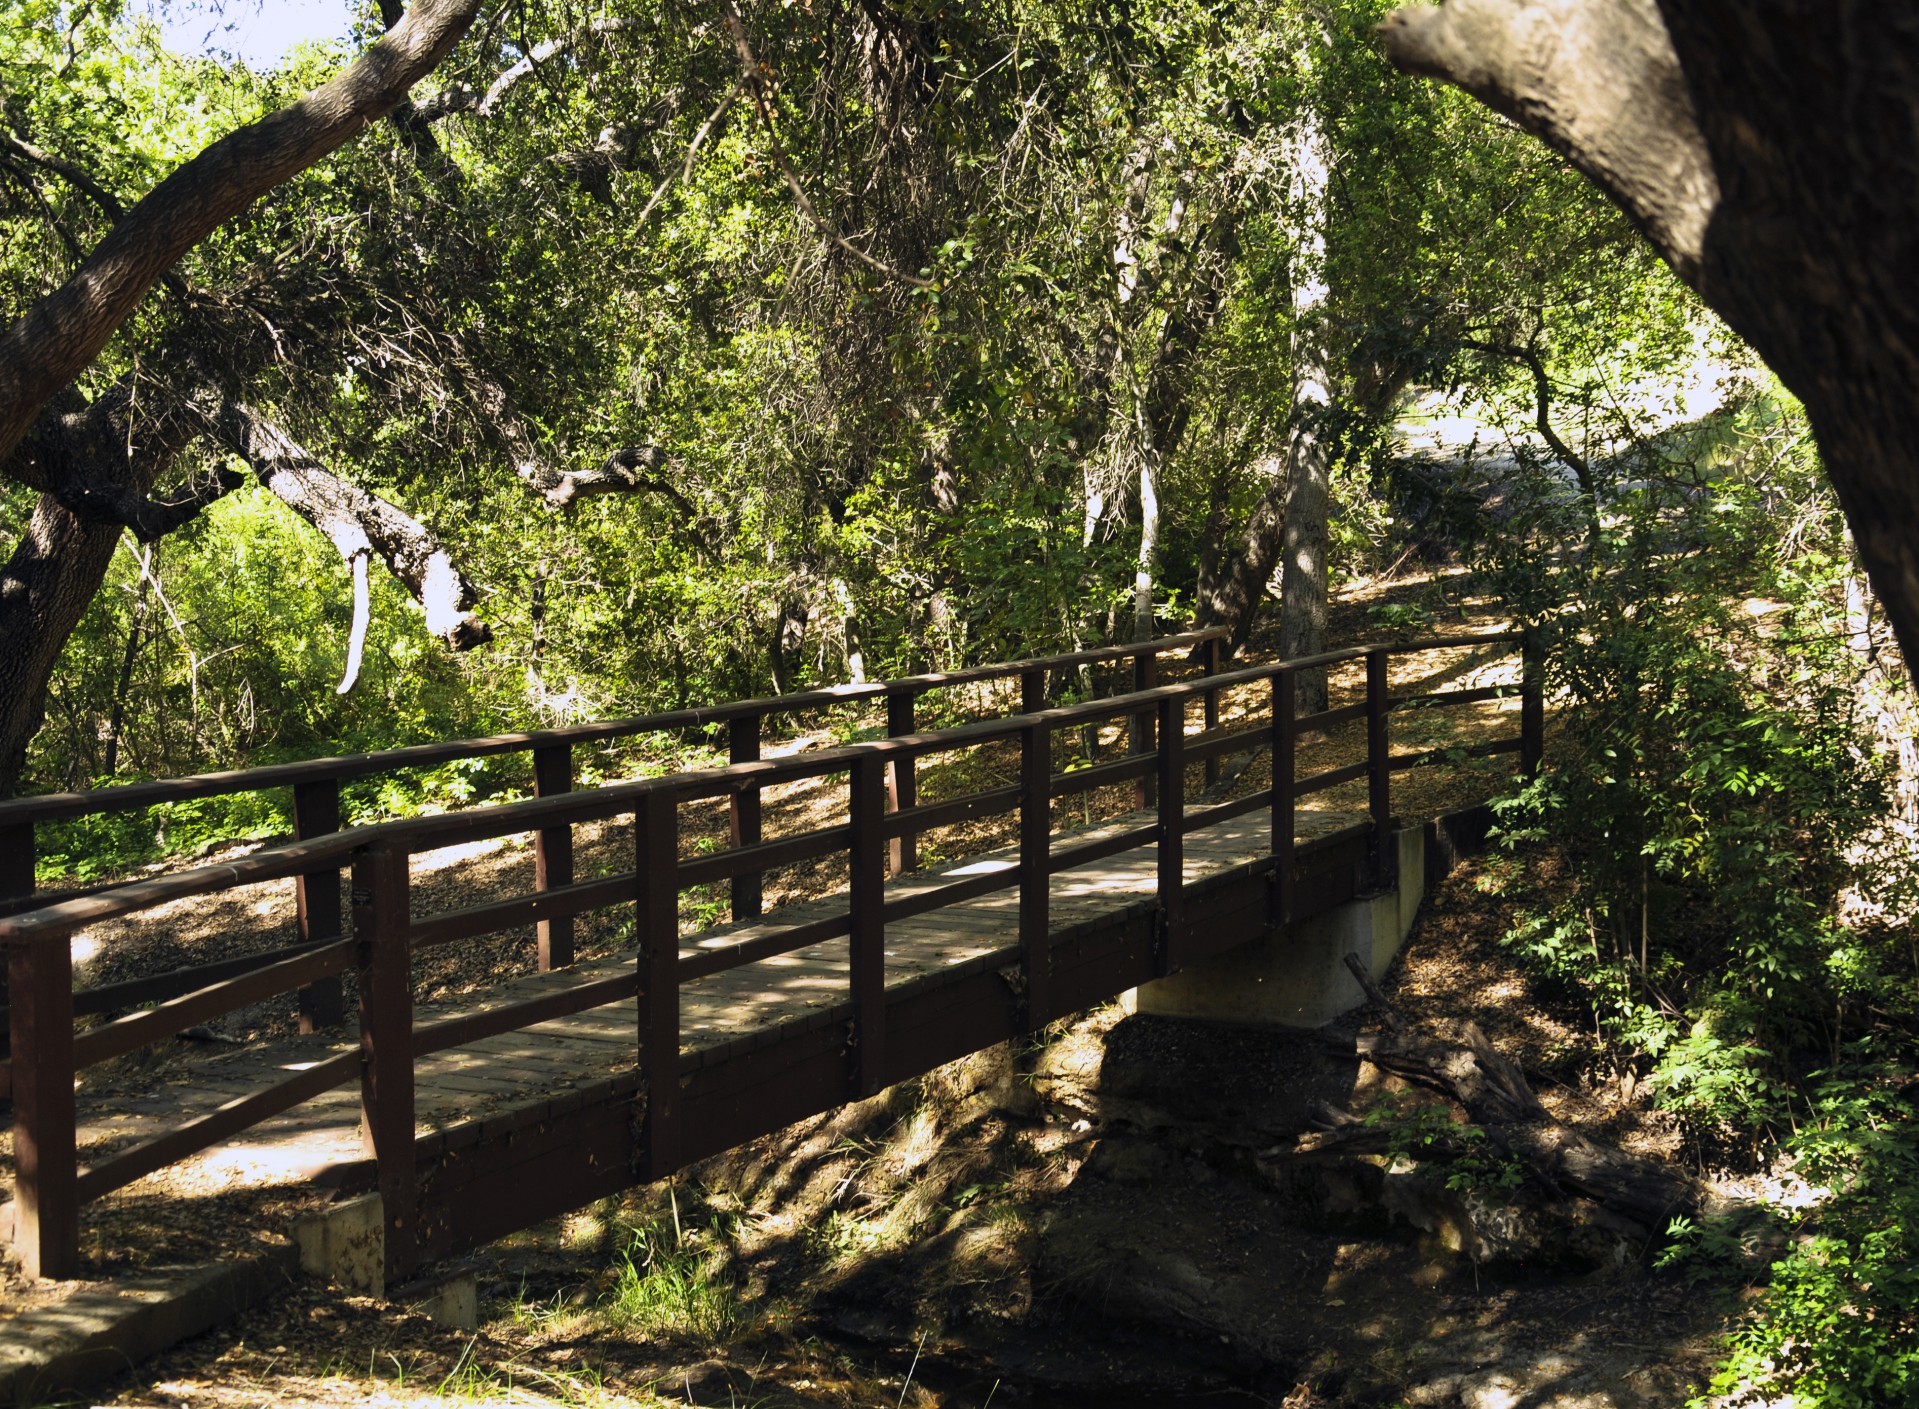 Bridge Wood Wooden Botanical Garden Green Free Image From